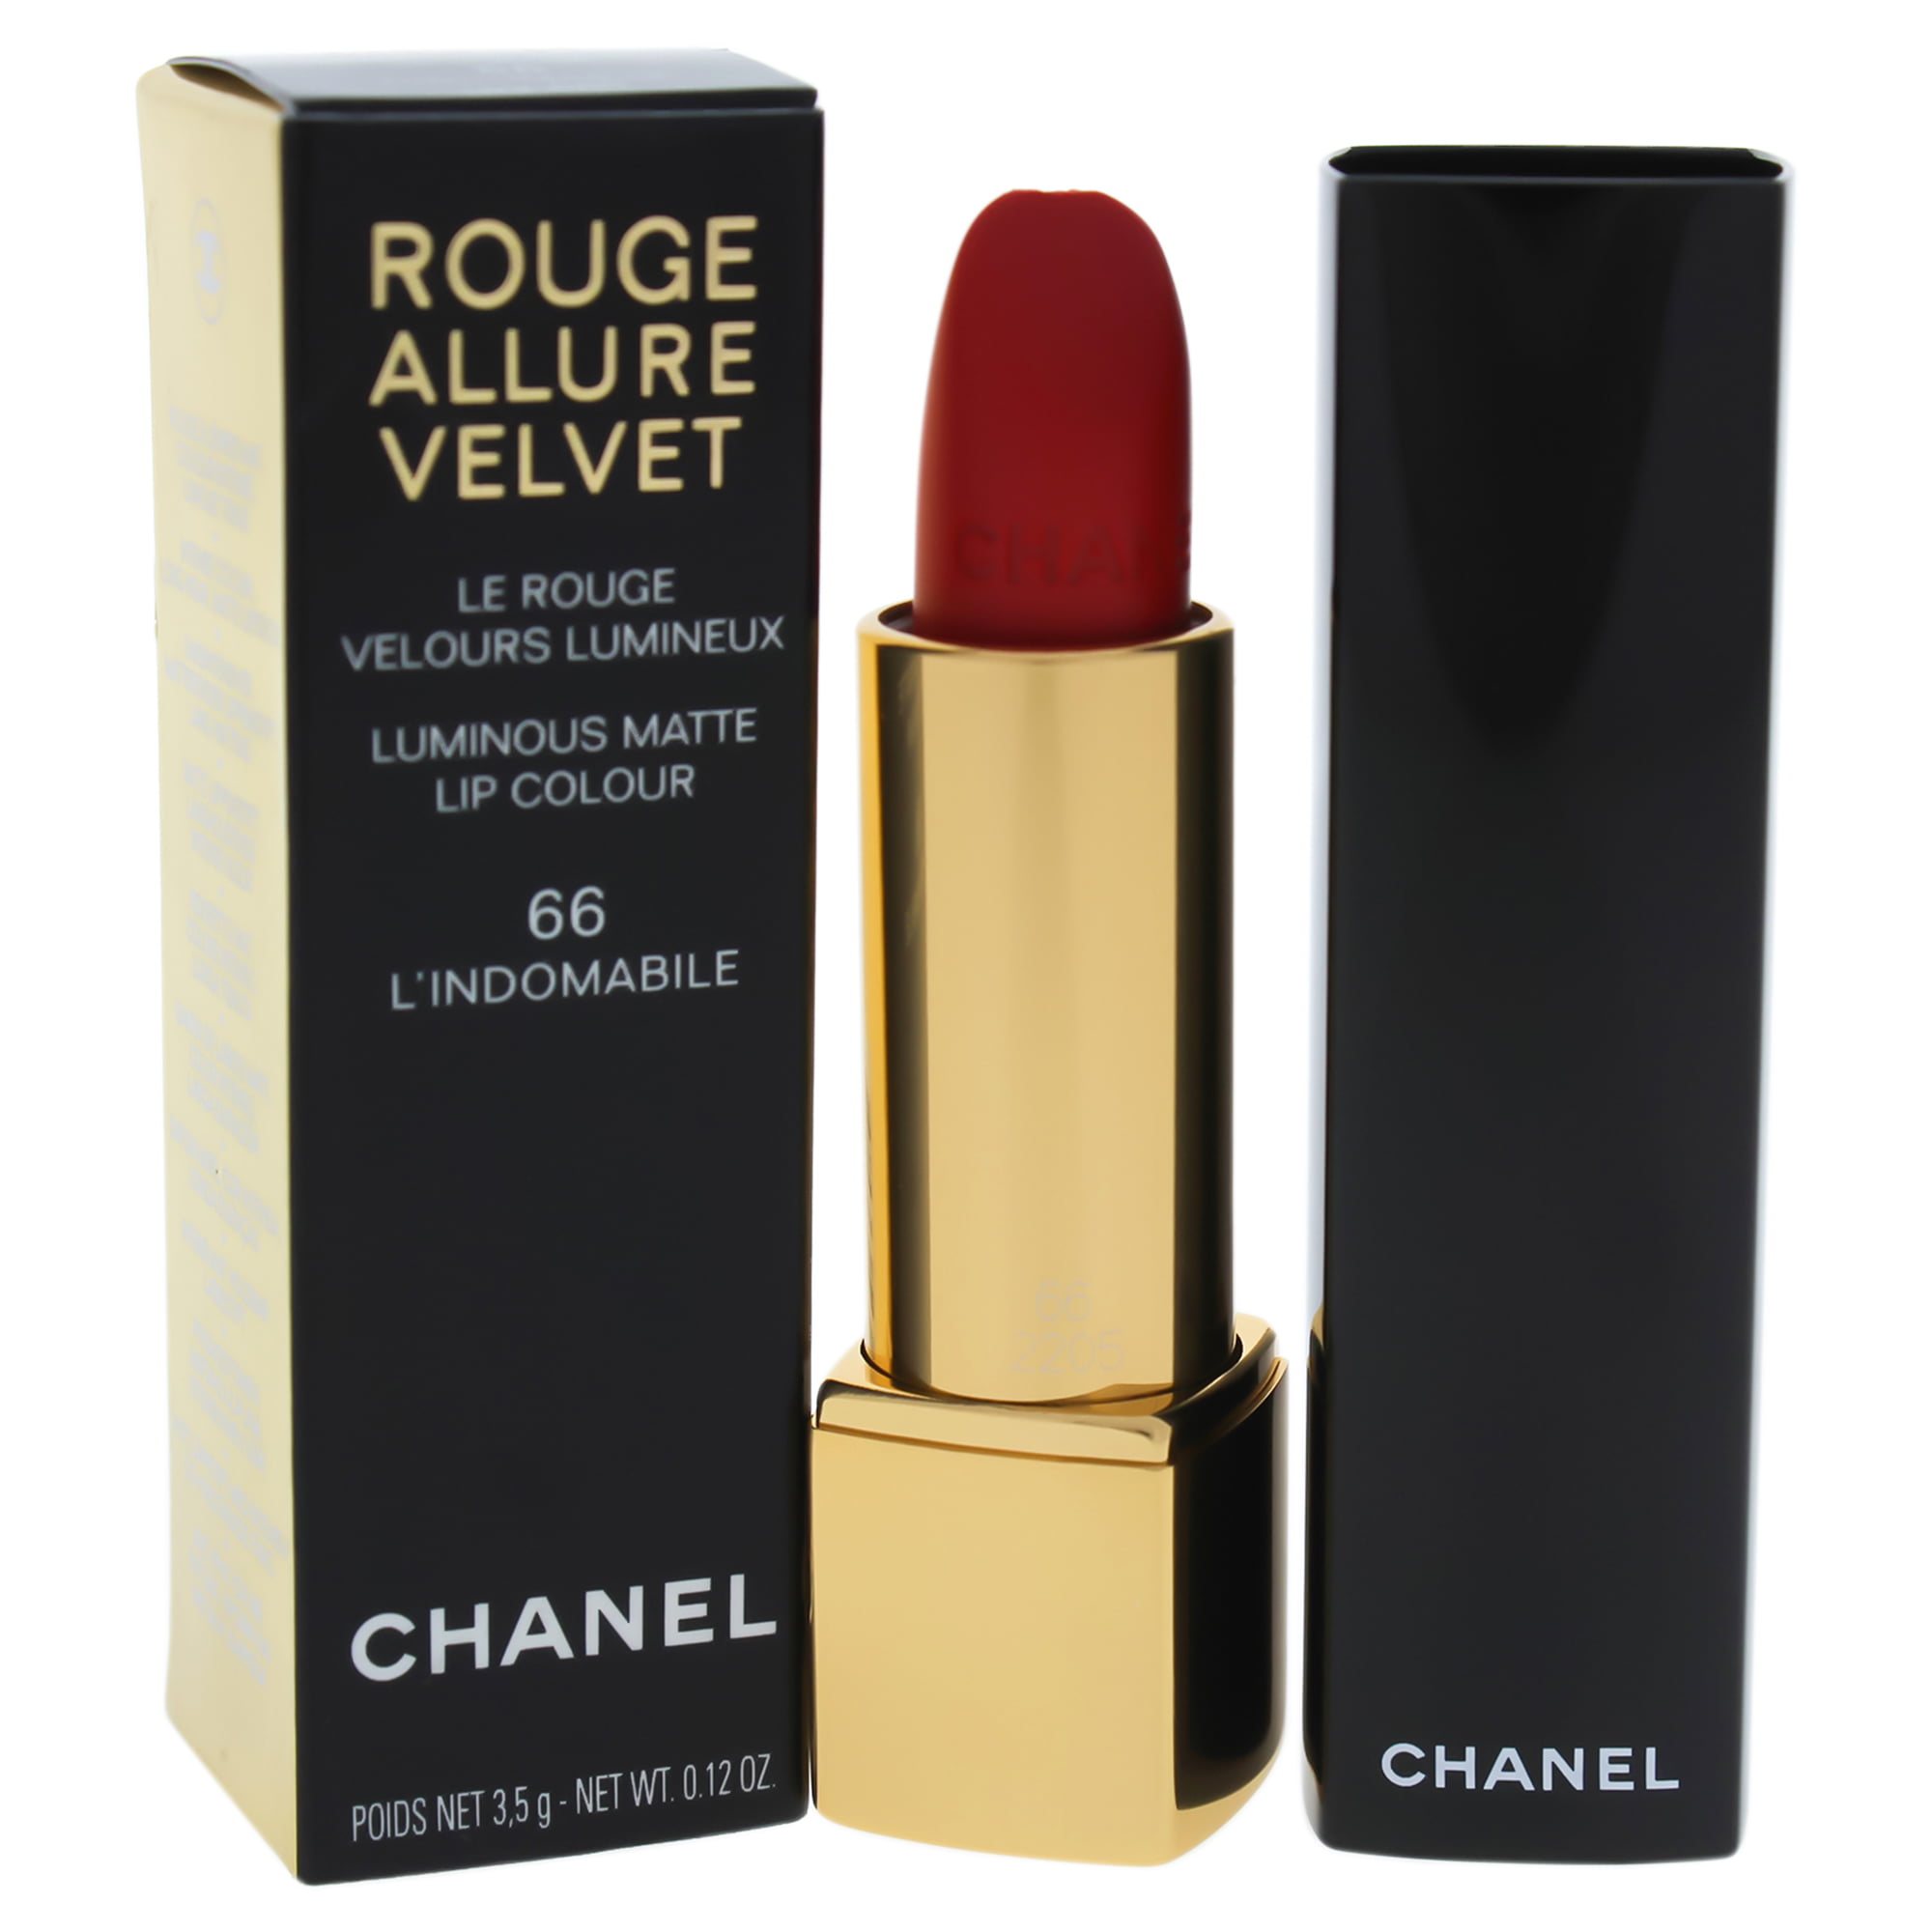 Rouge Allure Velvet Luminous Lip Colour - 66 LIndomabile by Chanel for Women - 0.12 oz Lipstic - Walmart.com